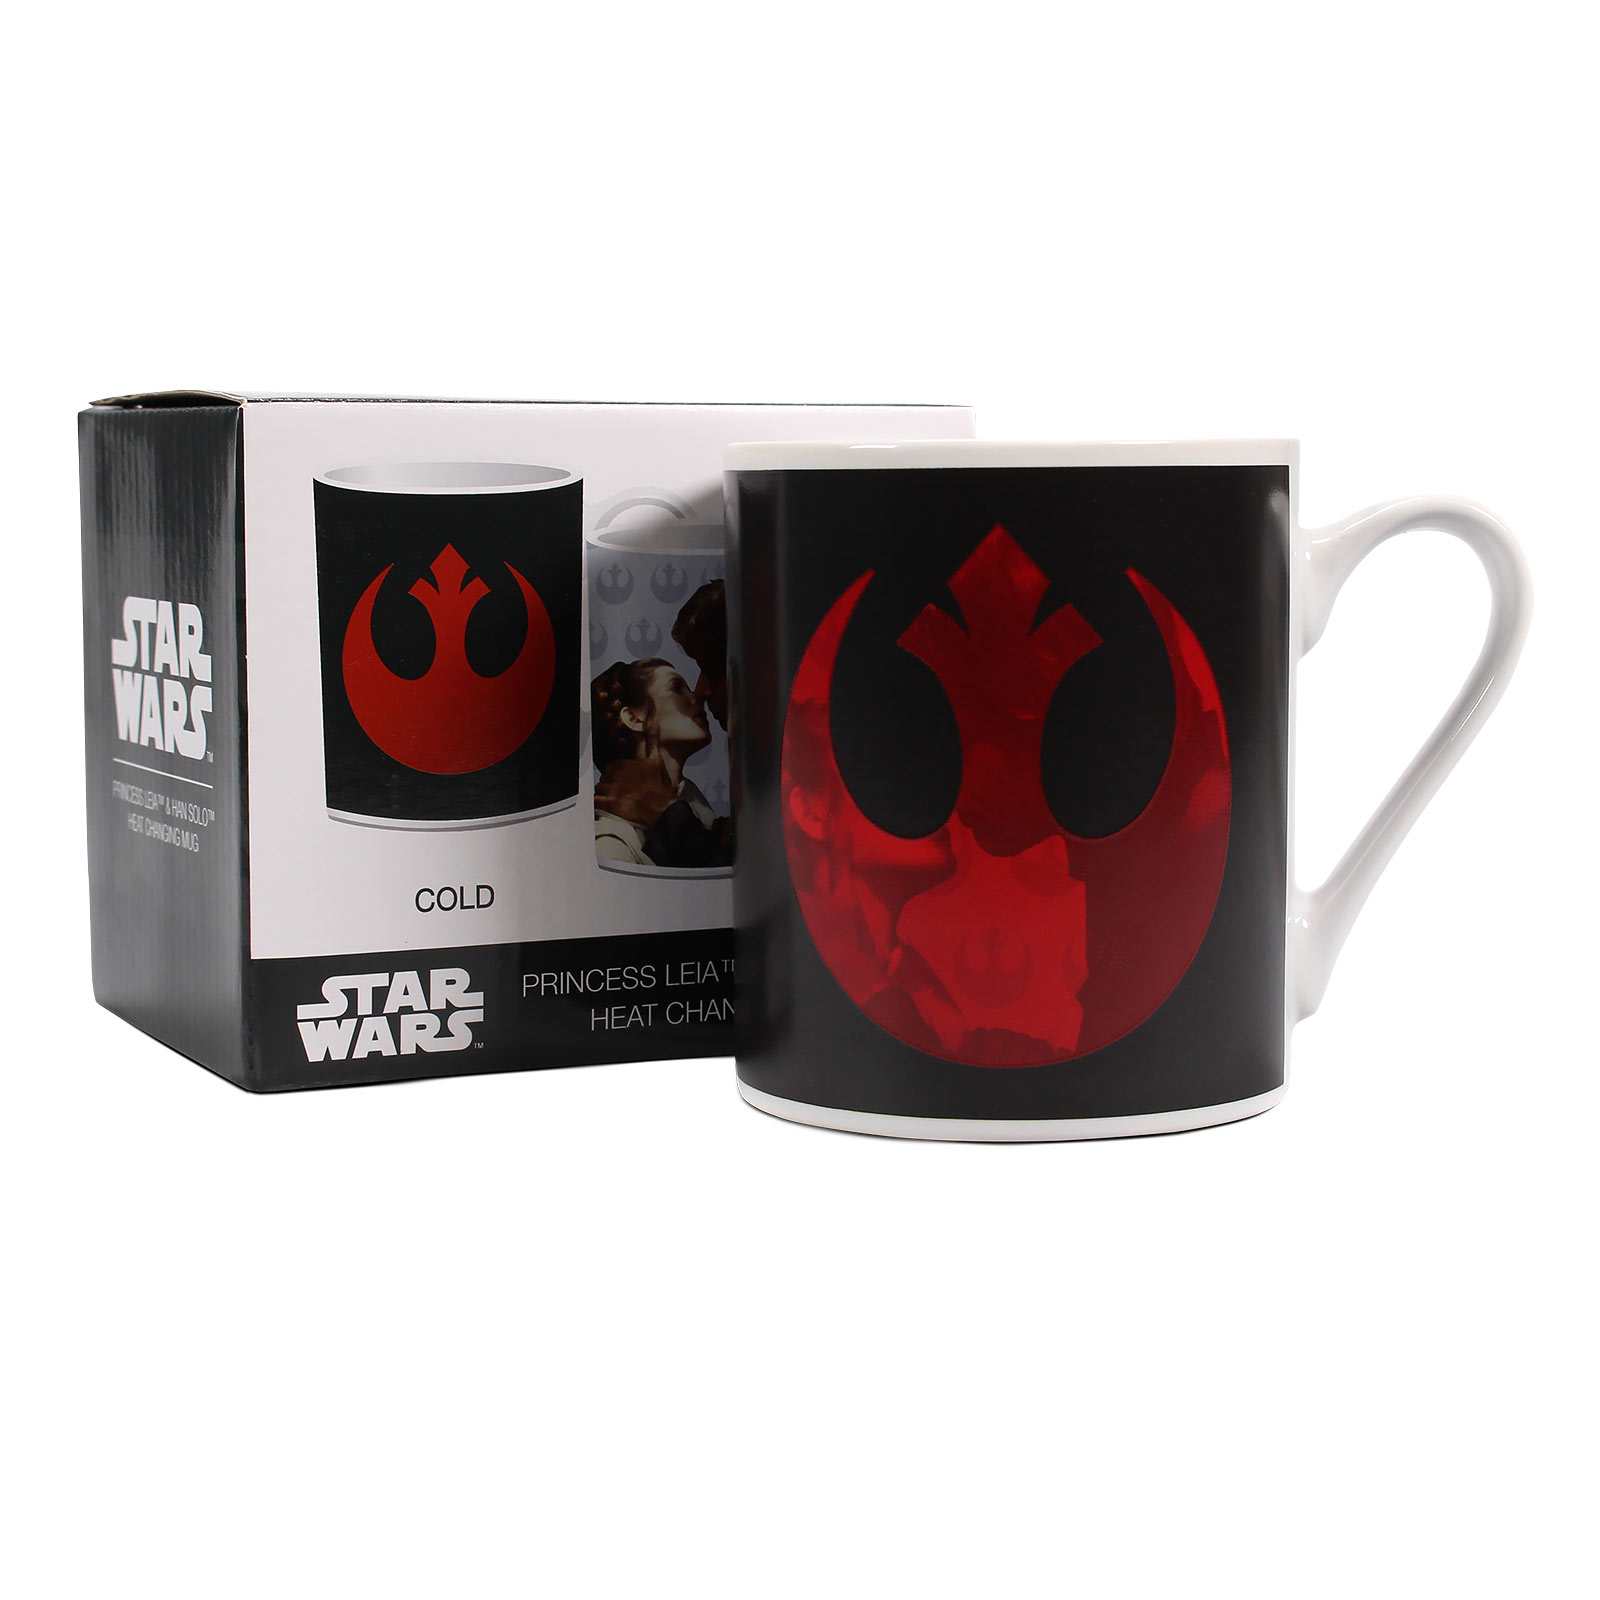 Star Wars - Leia and Han Solo thermo effect mug